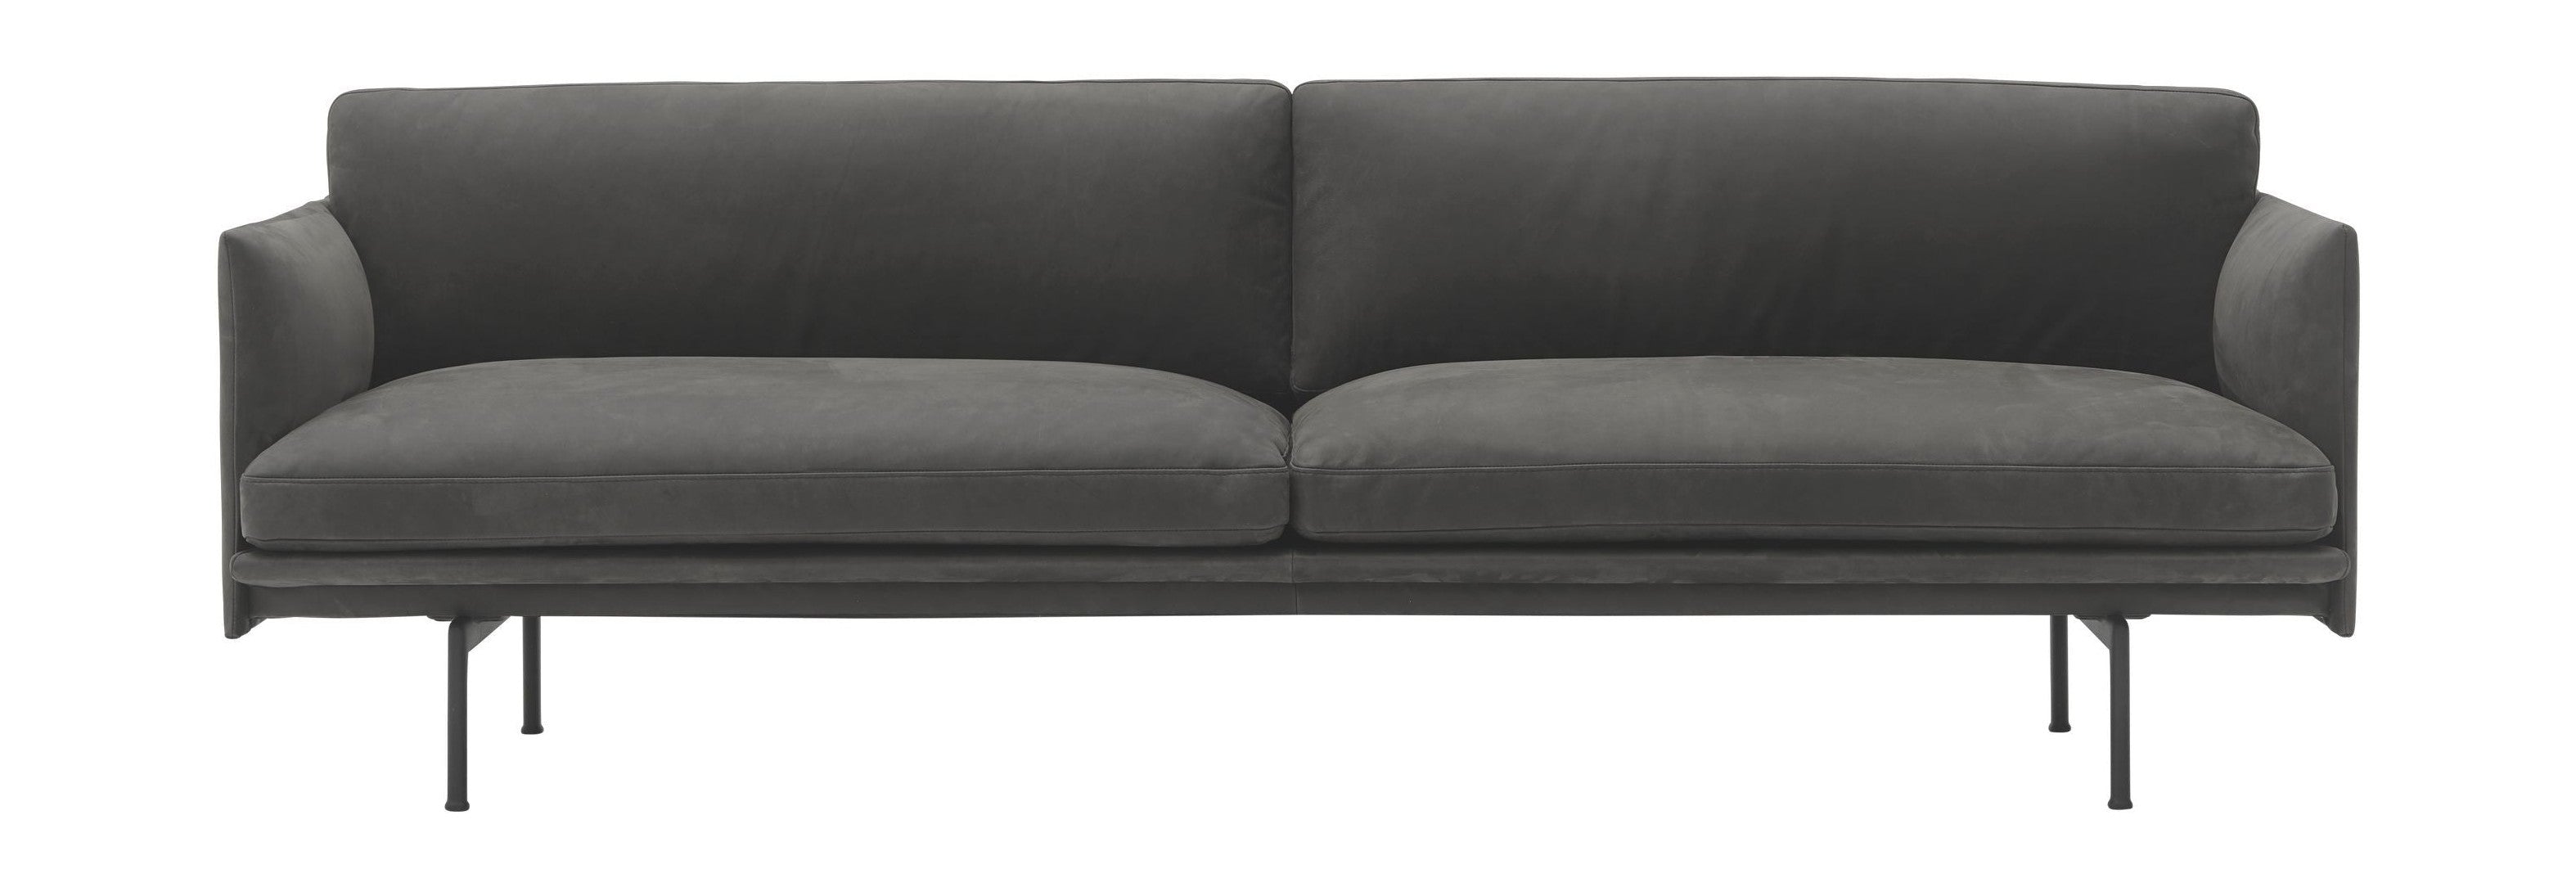 Muuto Overzicht Sofa 3 -zuivering Grace Leather, Gray/Black